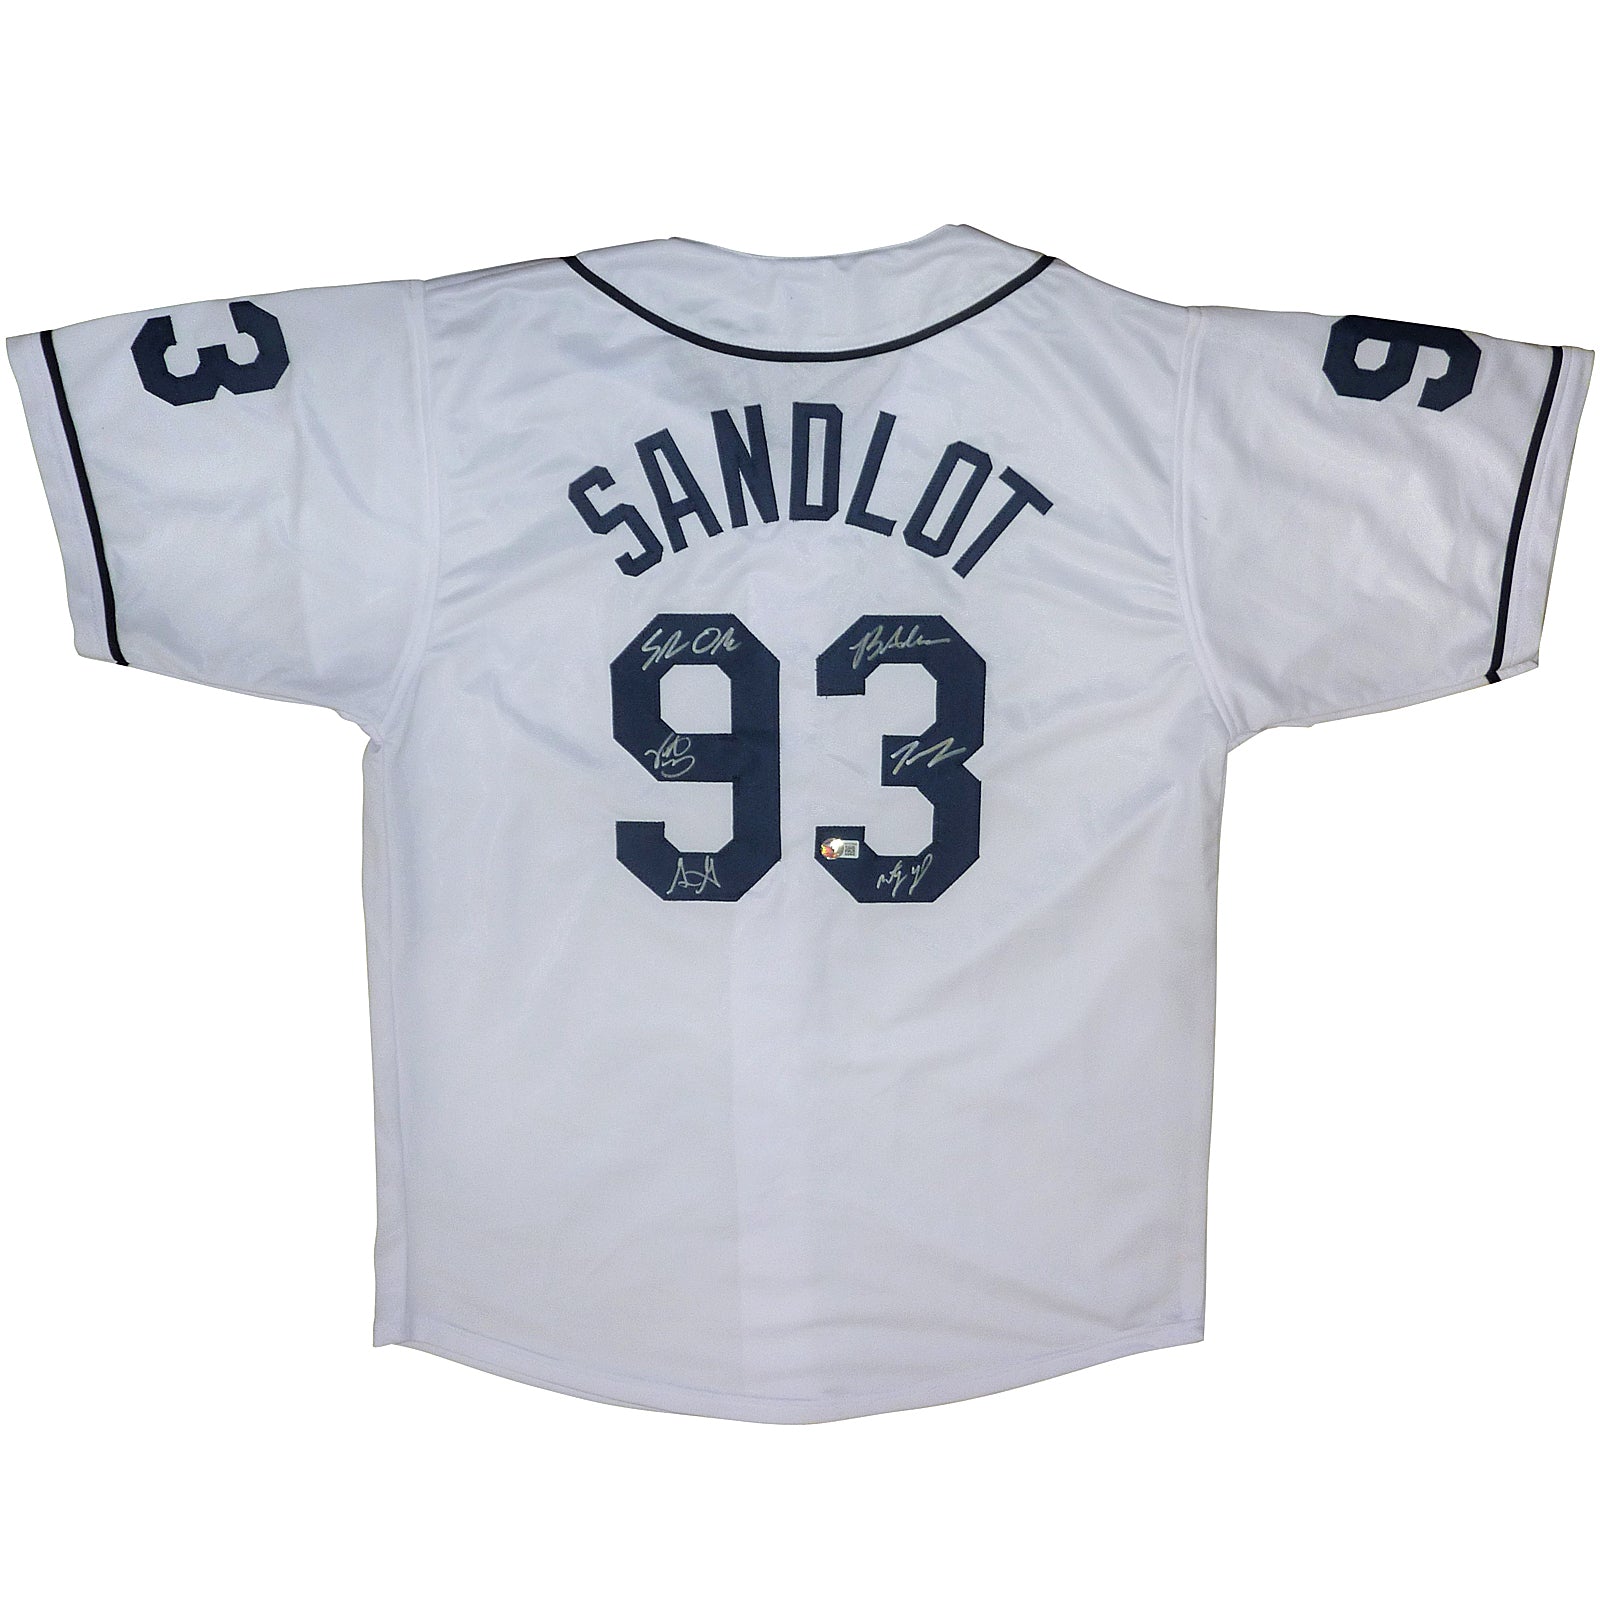 The Sandlot Cast Autographed Custom Baseball Jersey - 6 Signatures